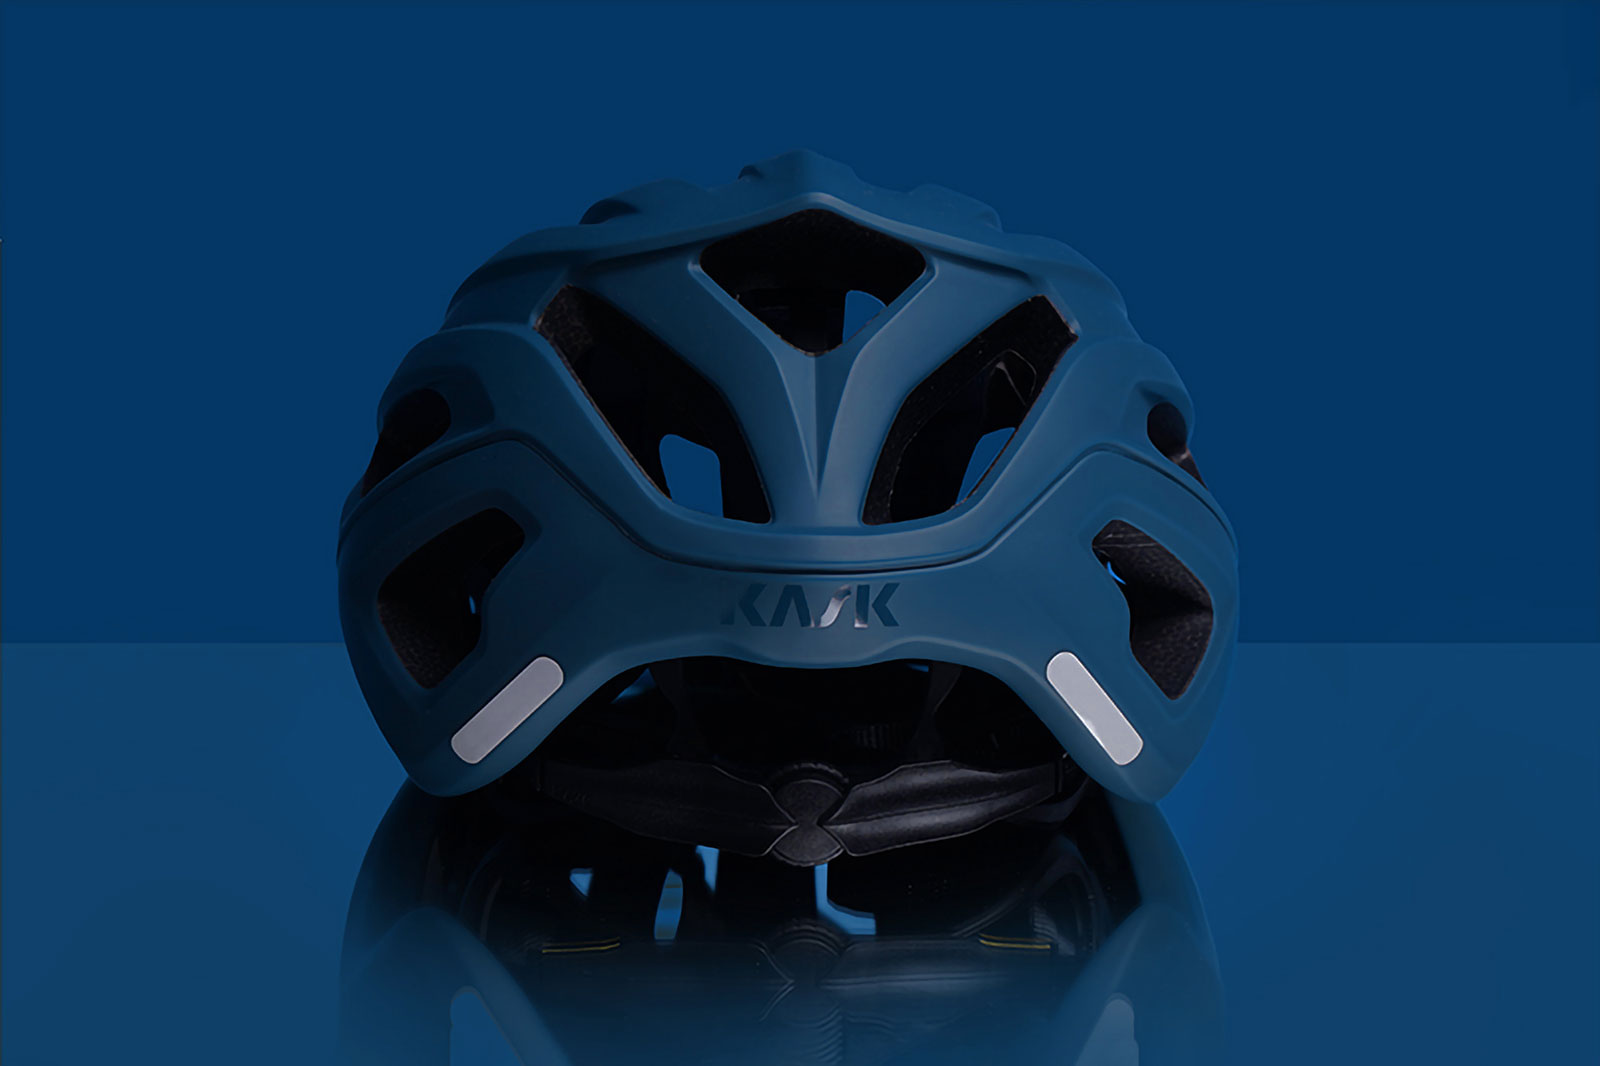 kask mojito3 matte blue road gravel bike helmet